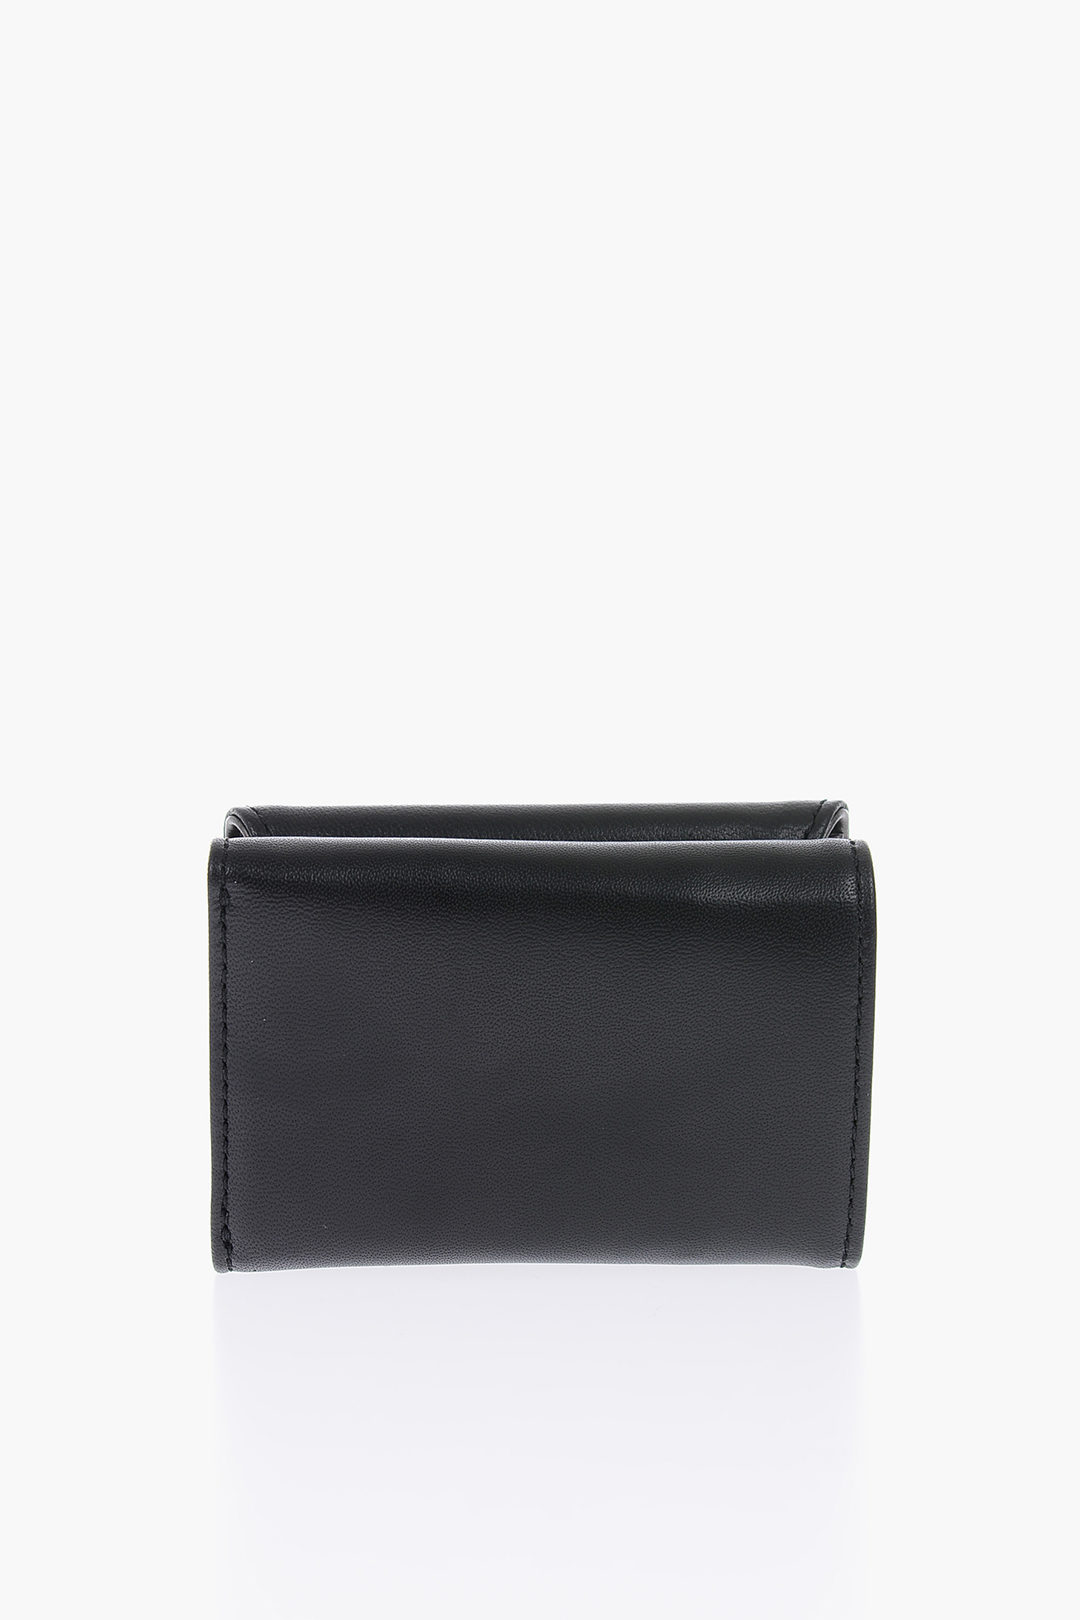 Diesel leather LORETTINA wallet women - Glamood Outlet